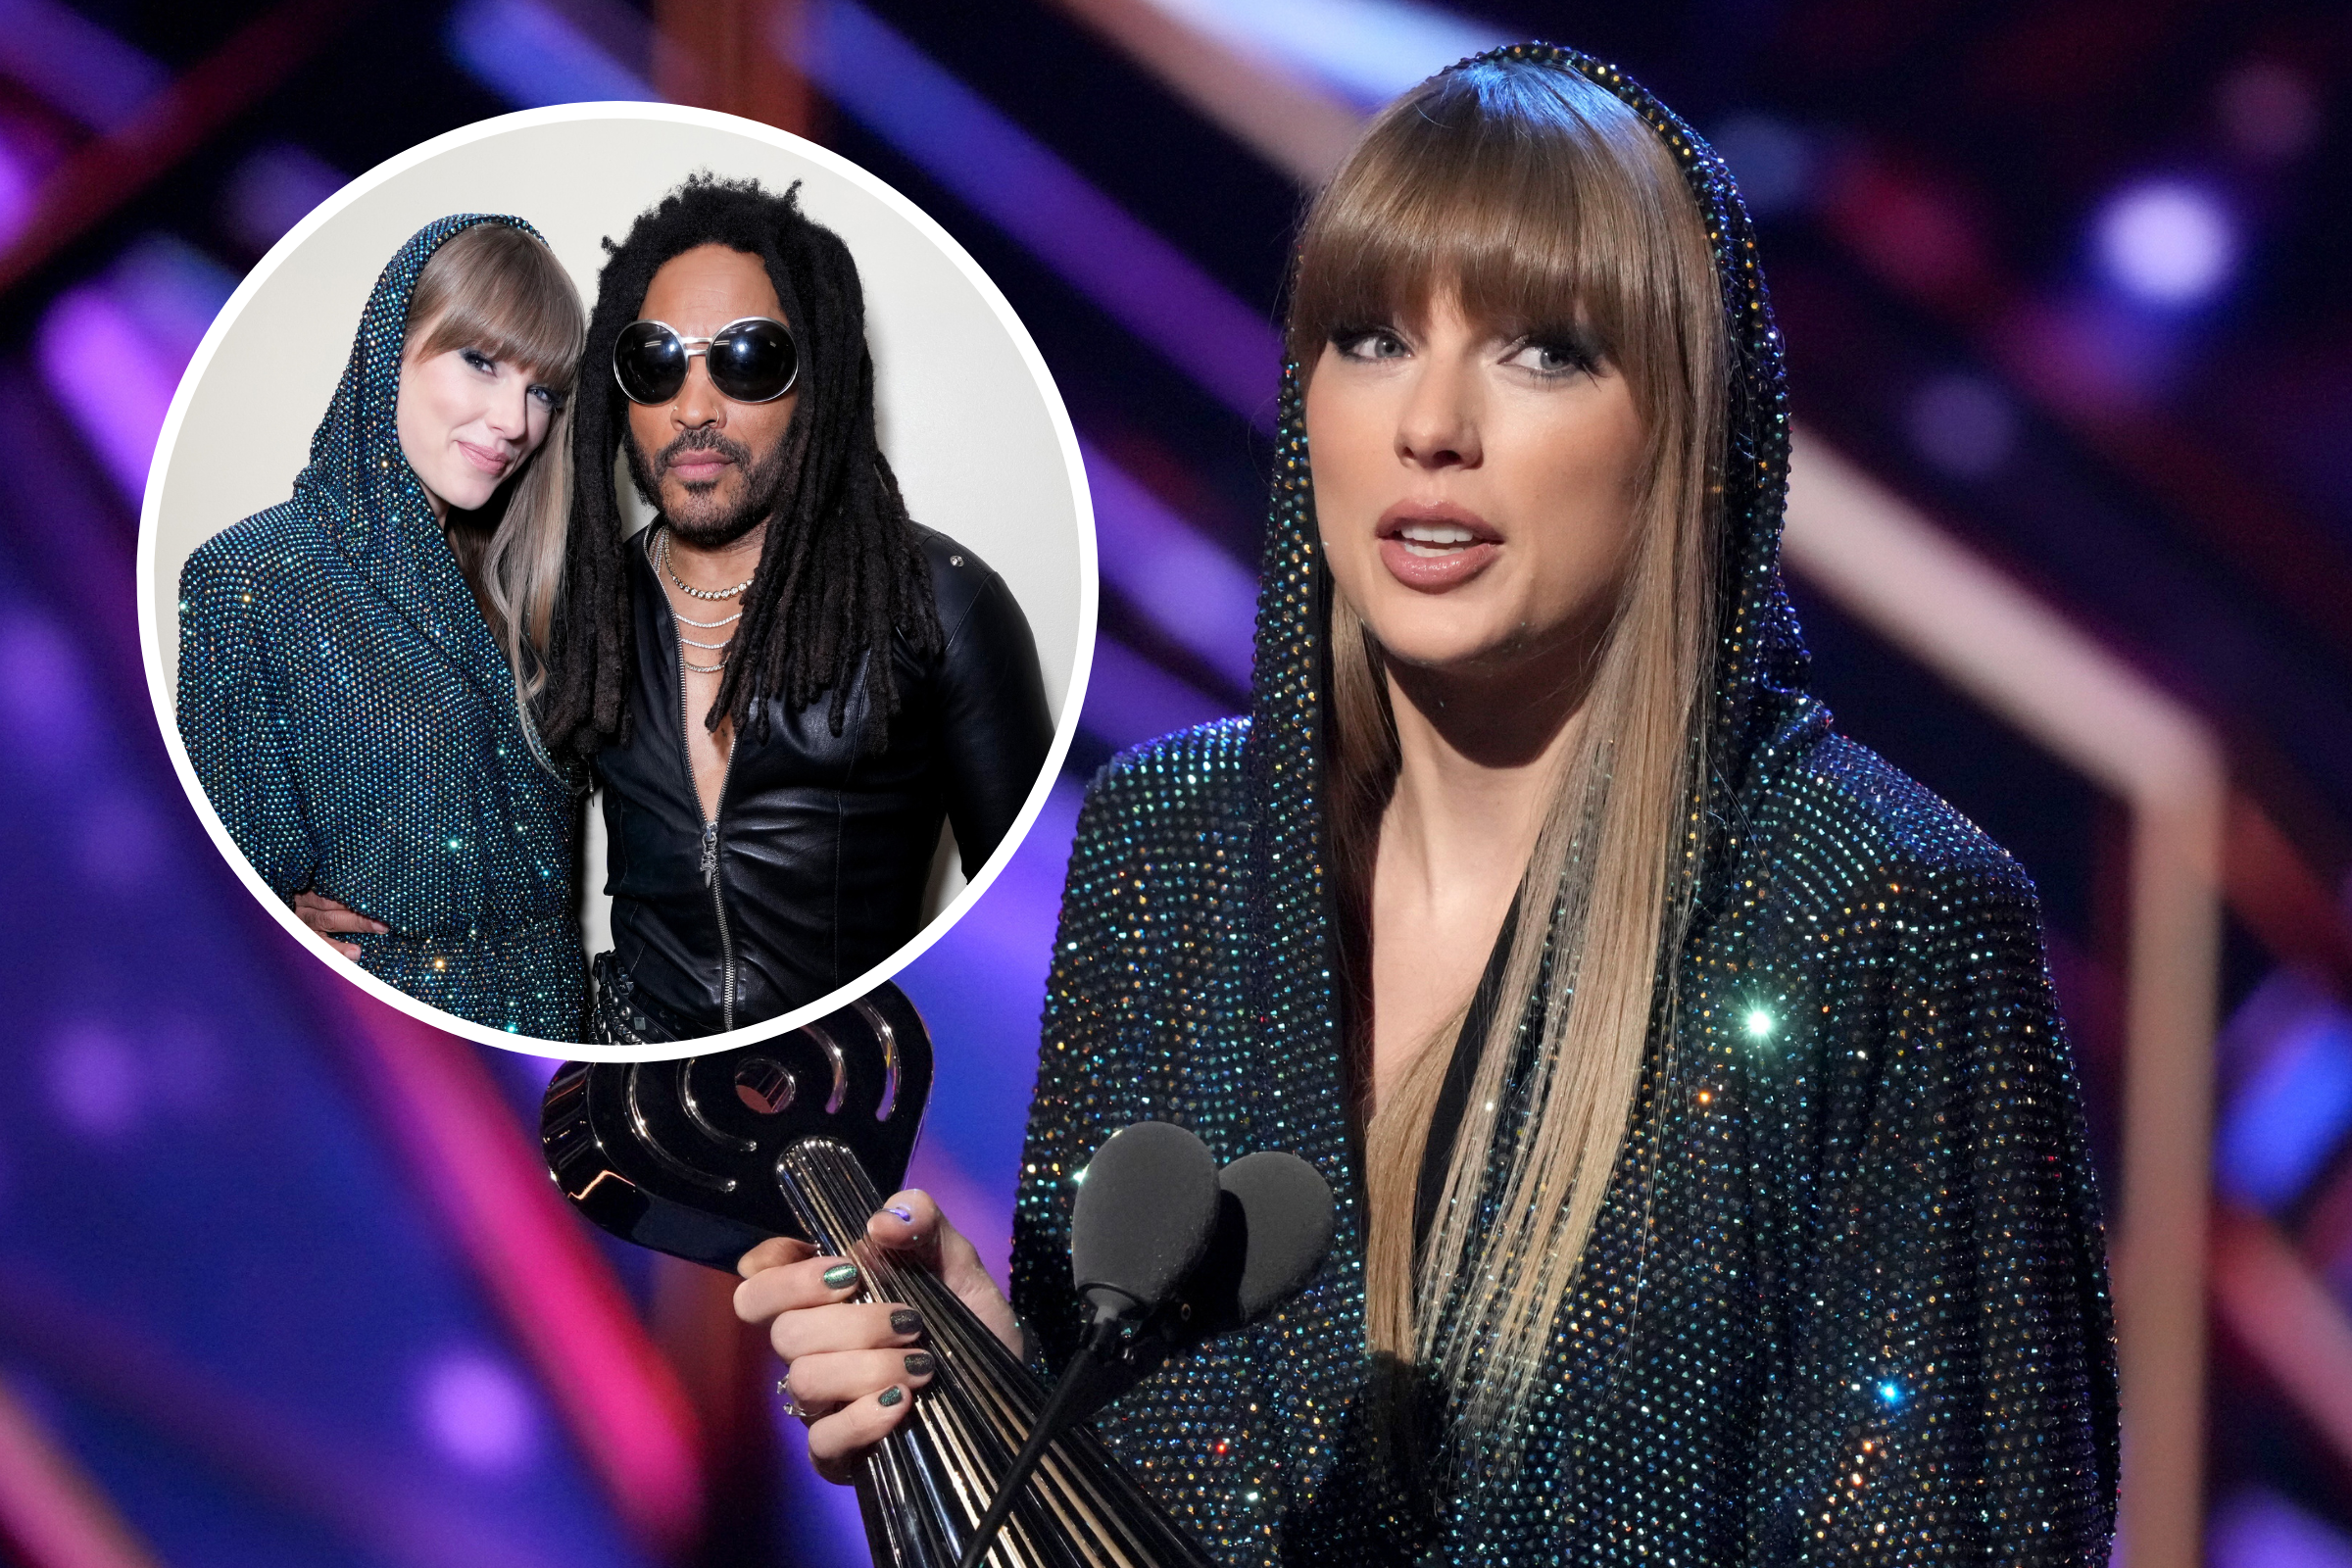 The Moment Taylor Swift Screams at Lenny Kravitz at iHeart Awards Goes Viral